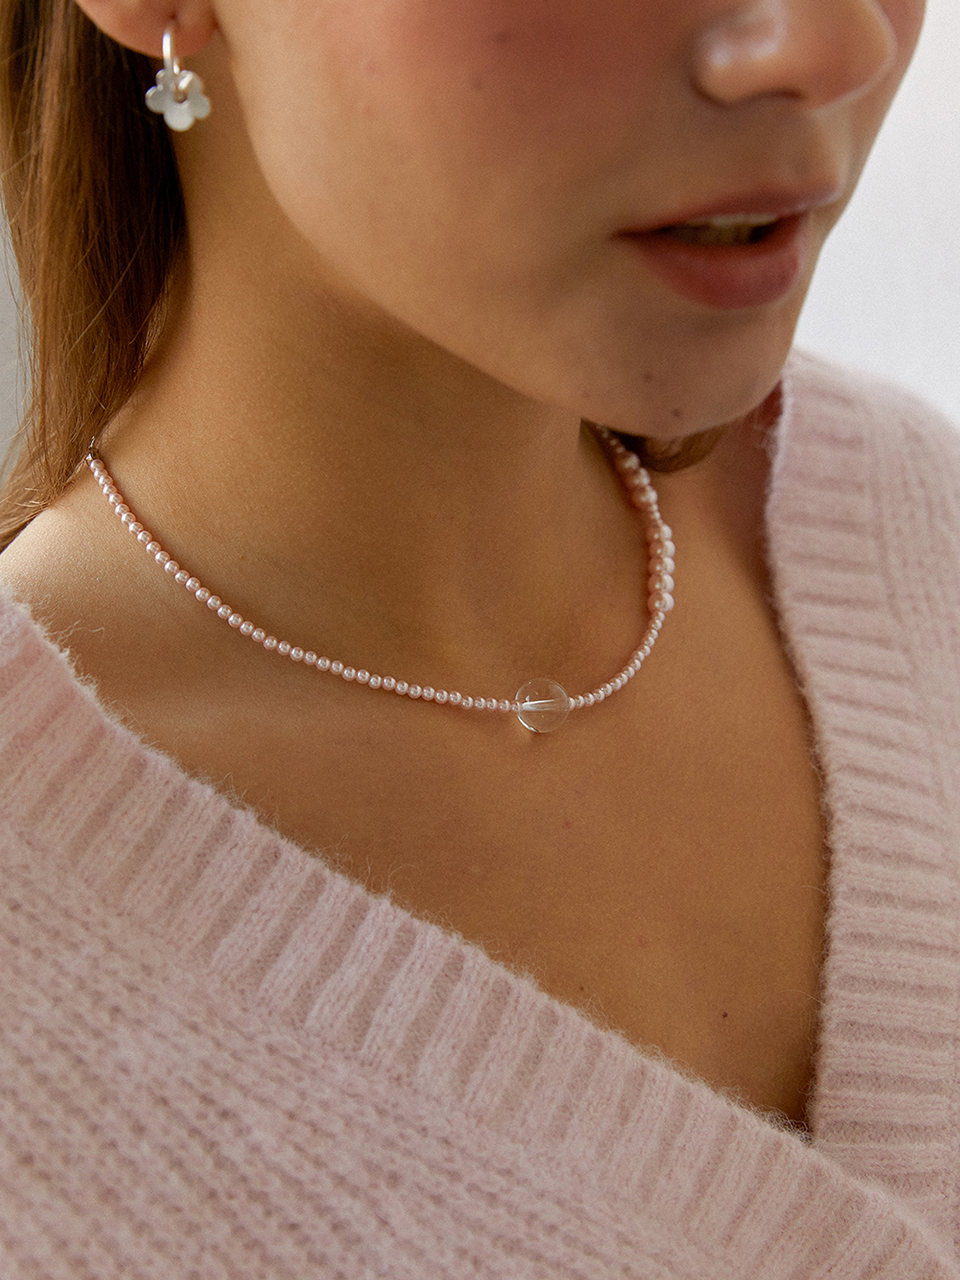 volume pink necklace